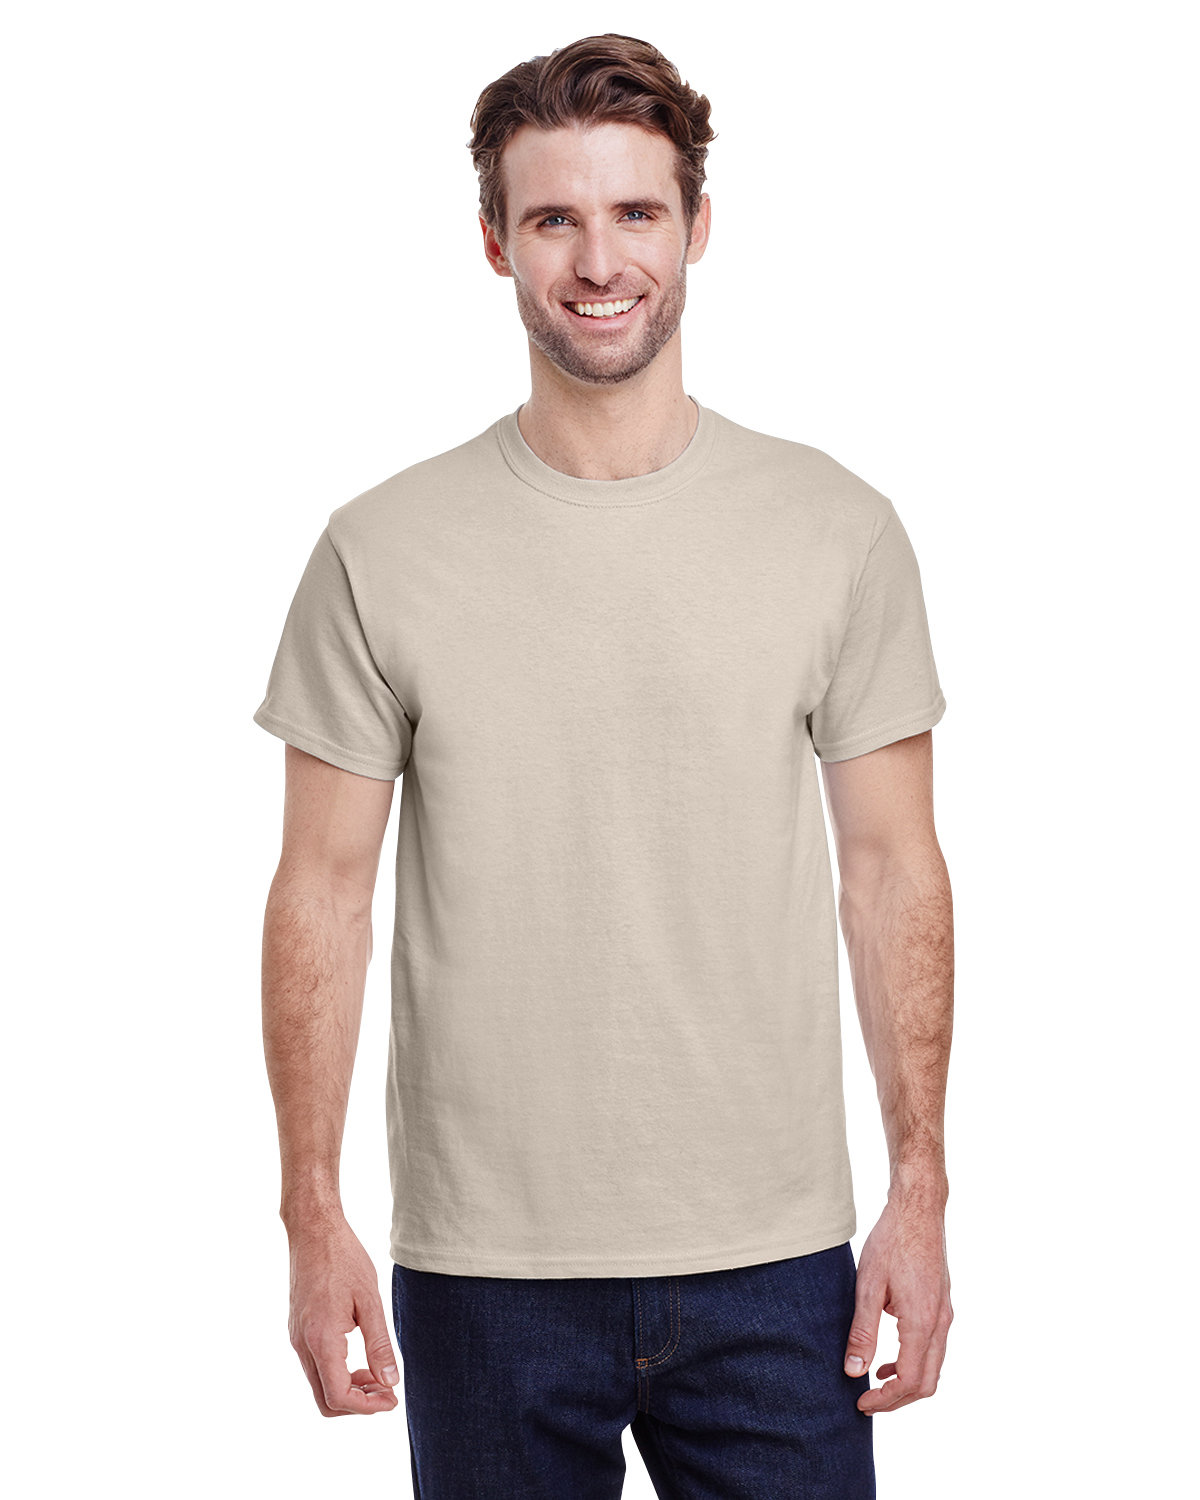 Buy Tweens Pack Of 2 Half Coverage T Shirt Bras TW91201 - Bra for